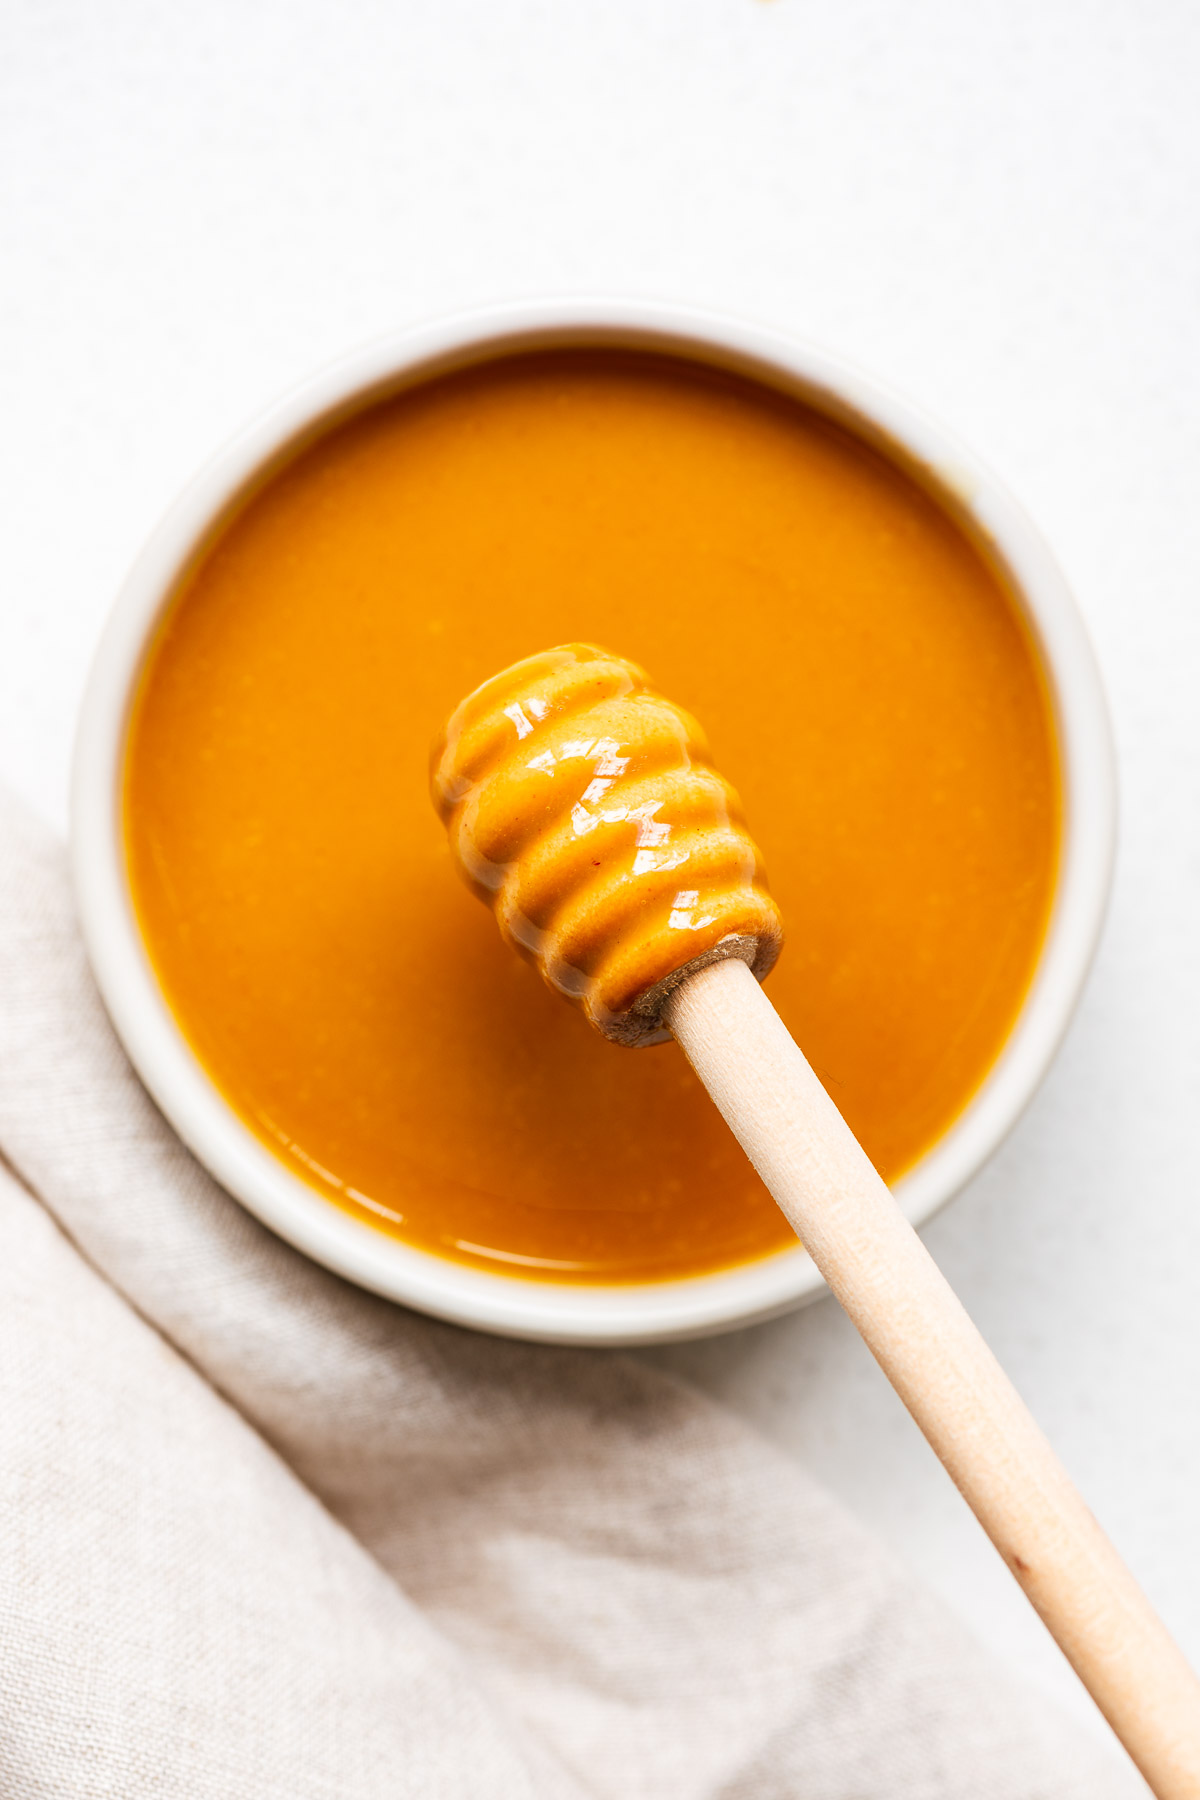 Hot honey mustard (made from Dijon mustard, hot honey, vinegar and salt) in a small bowl with a honey dipper stick.